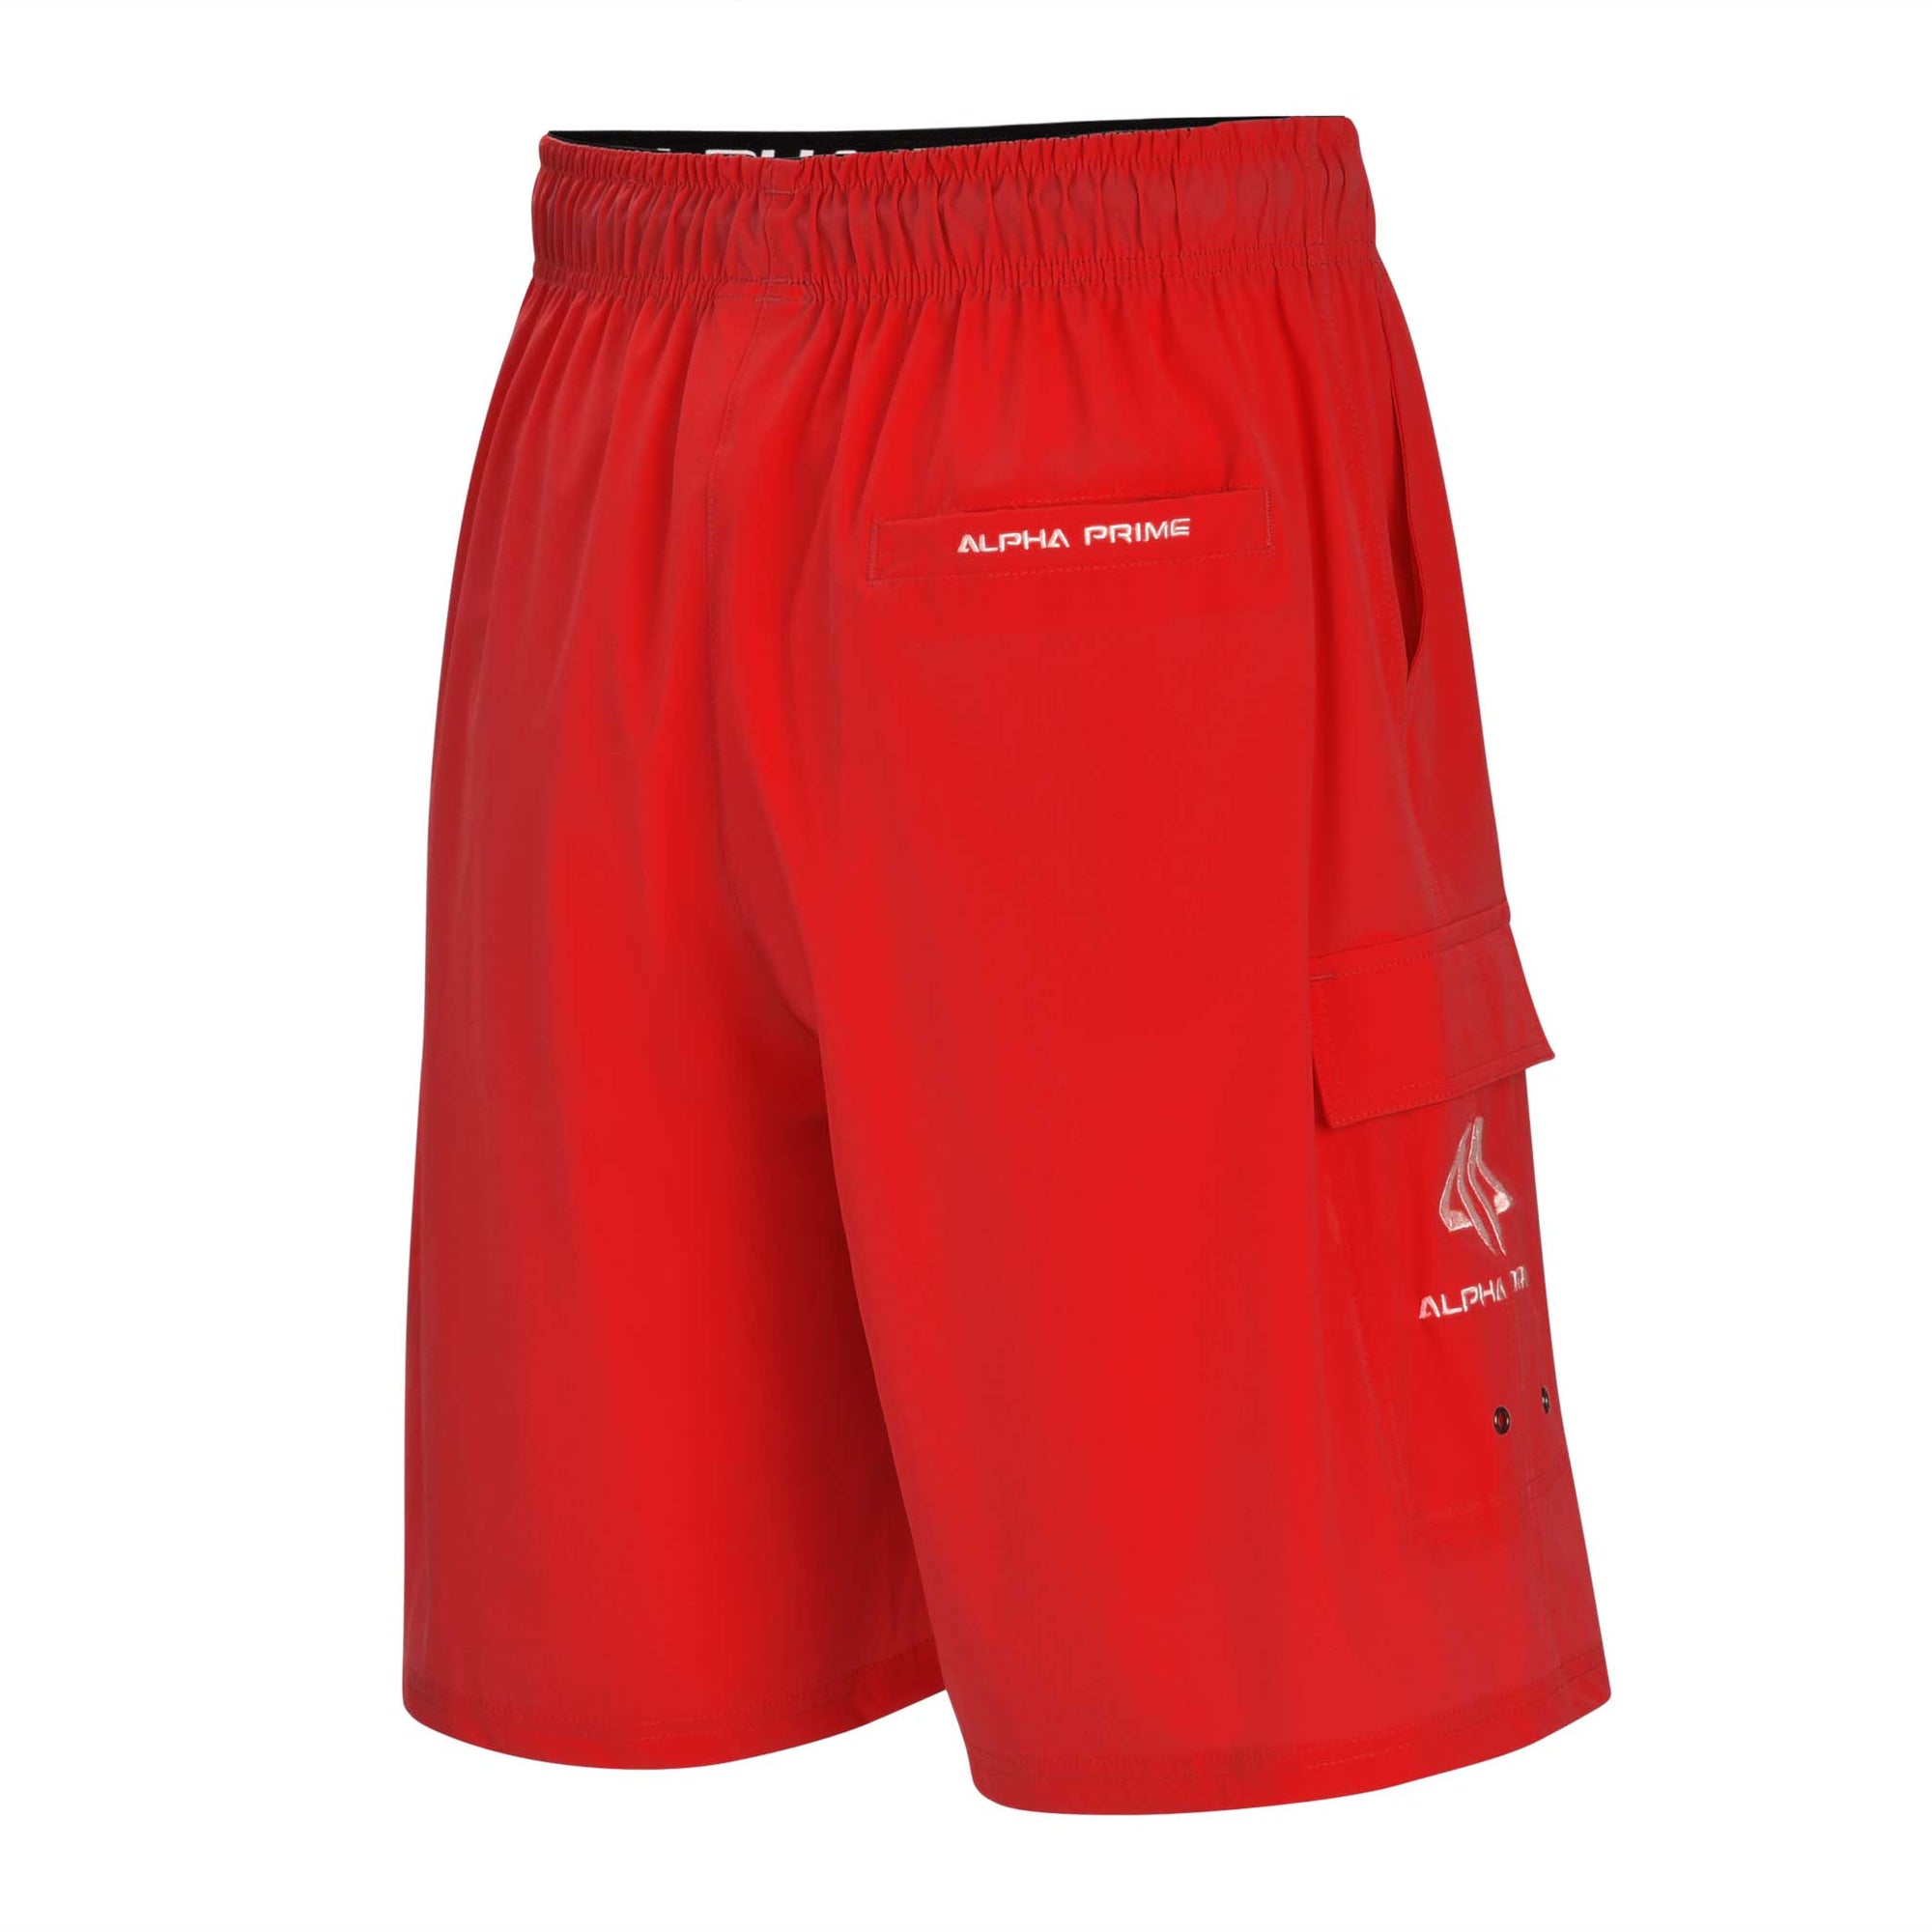 Microfiber - Prime Alpha Red Shorts – Sports Alpha Prime